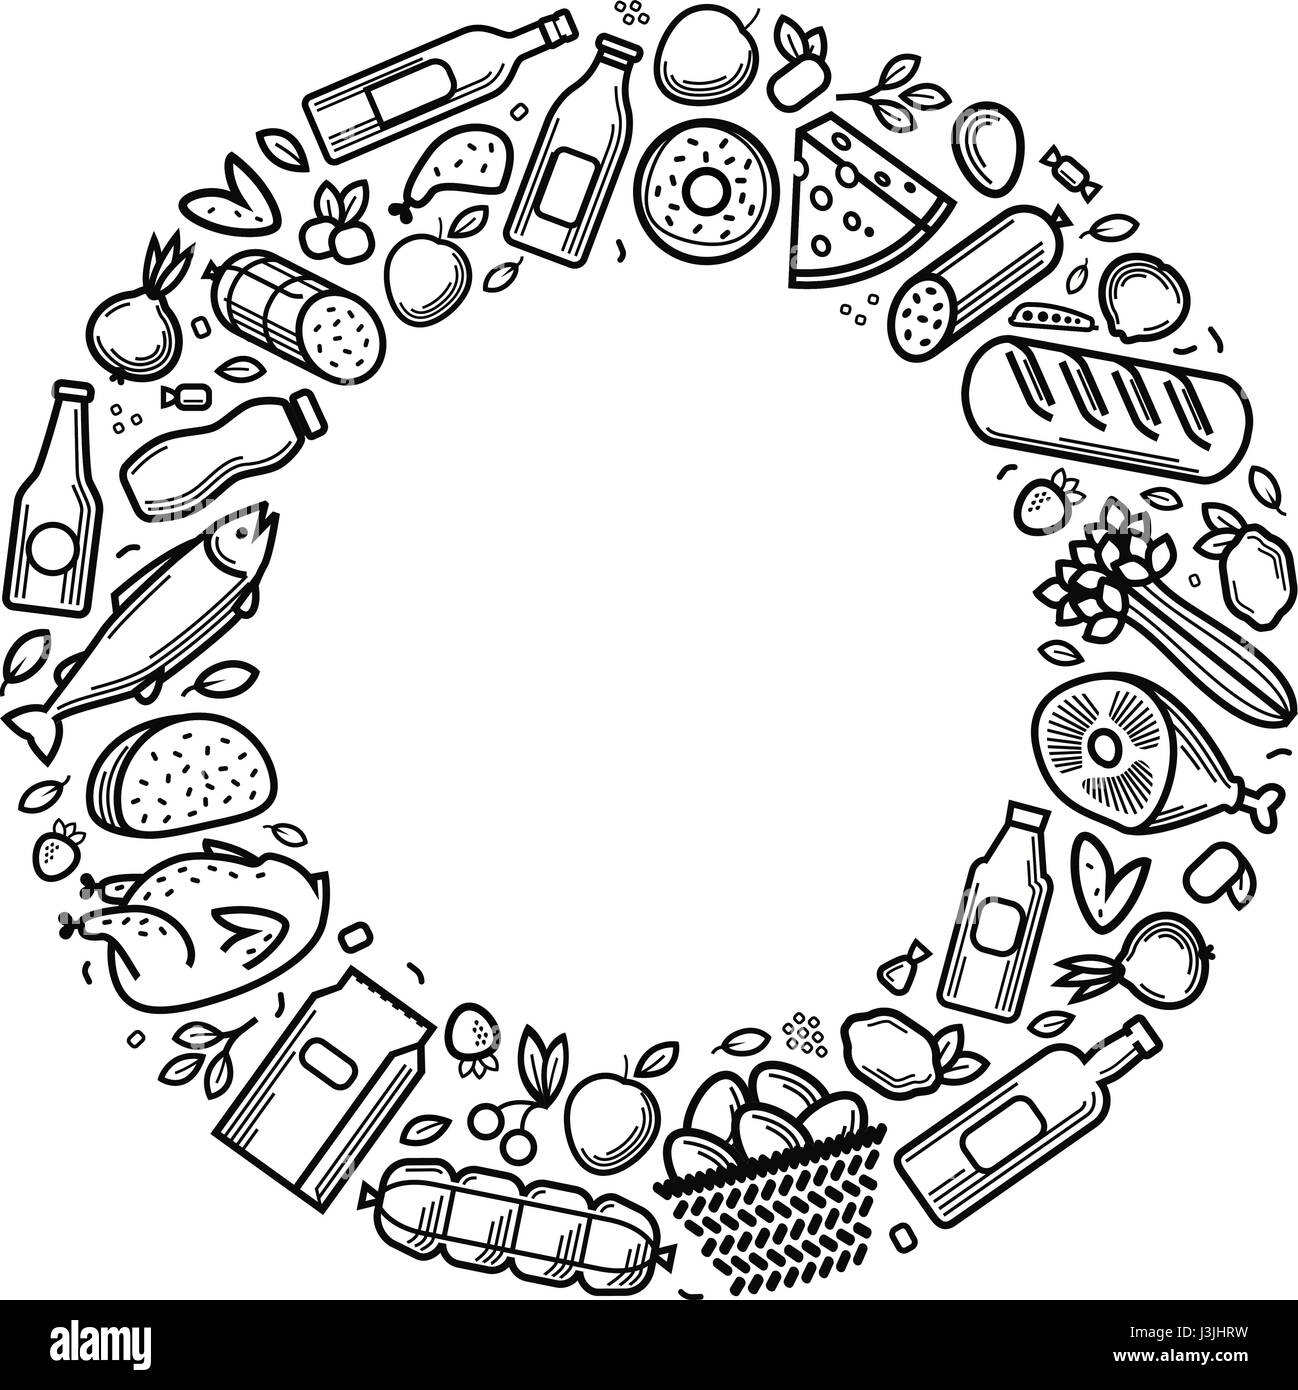 Lebensmittel, Getränke Icons Set. Lebensmittelgeschäft, Kochen, Küche-Banner. Vektor-illustration Stock Vektor